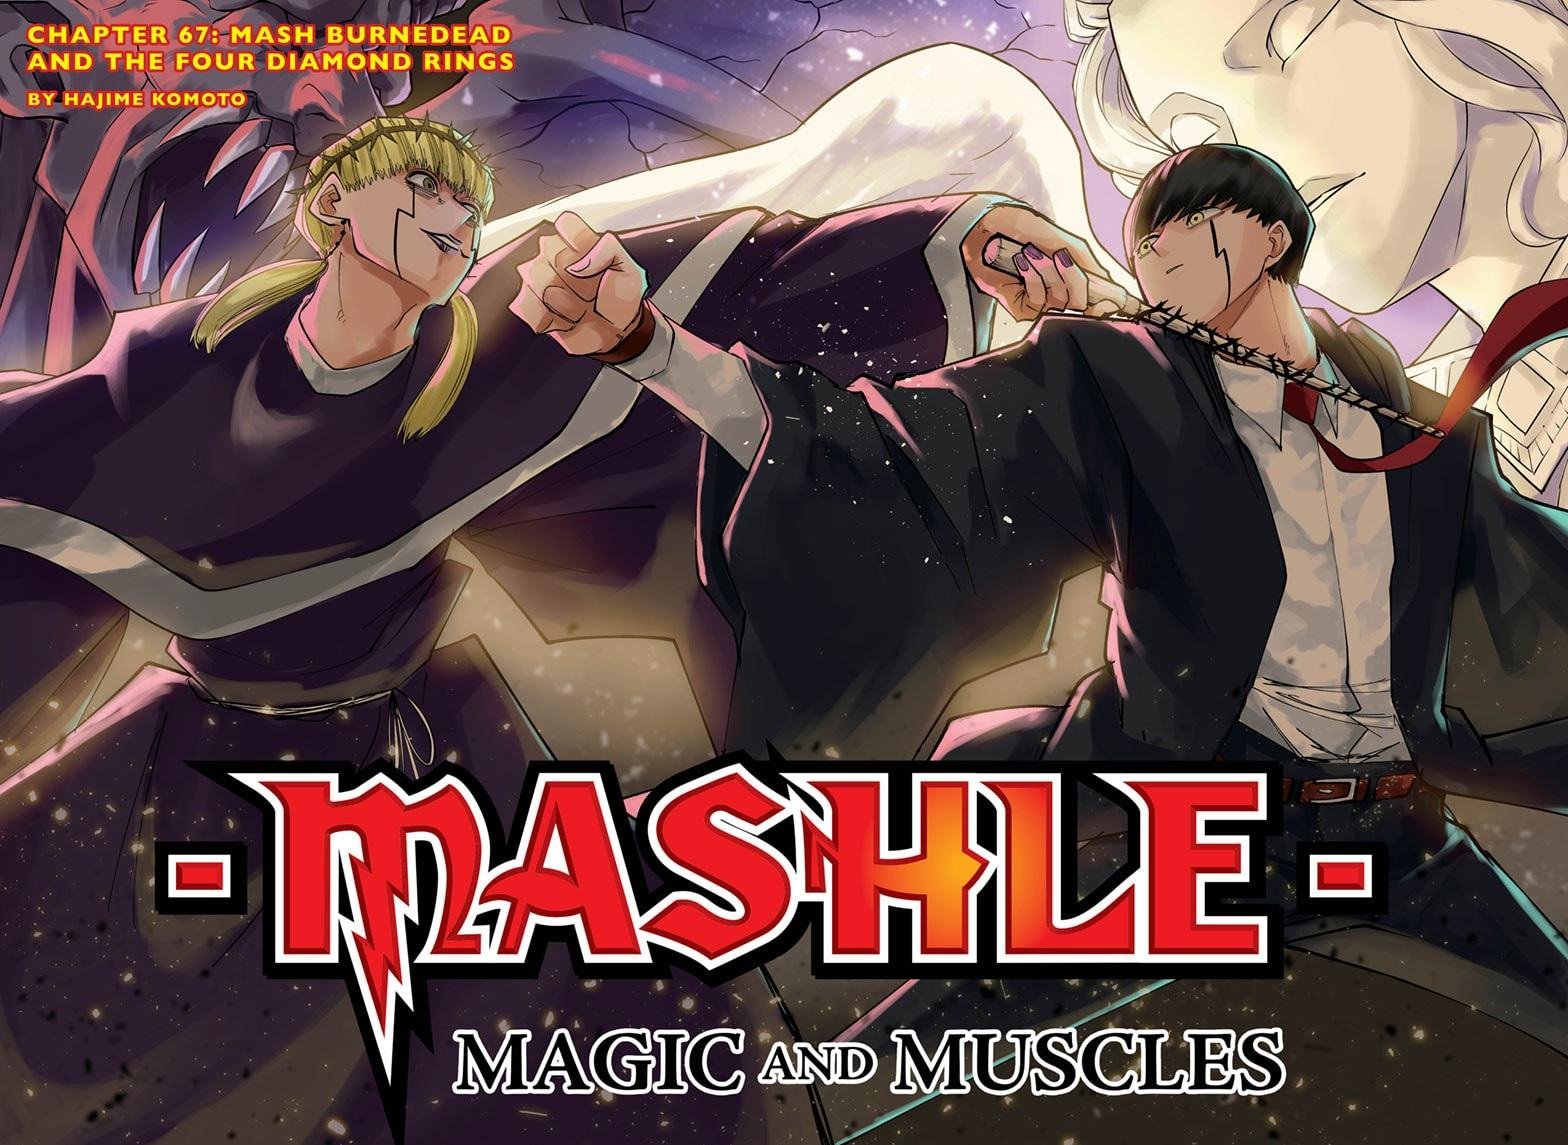 mashle-magic-and-muscles-chap-67-1